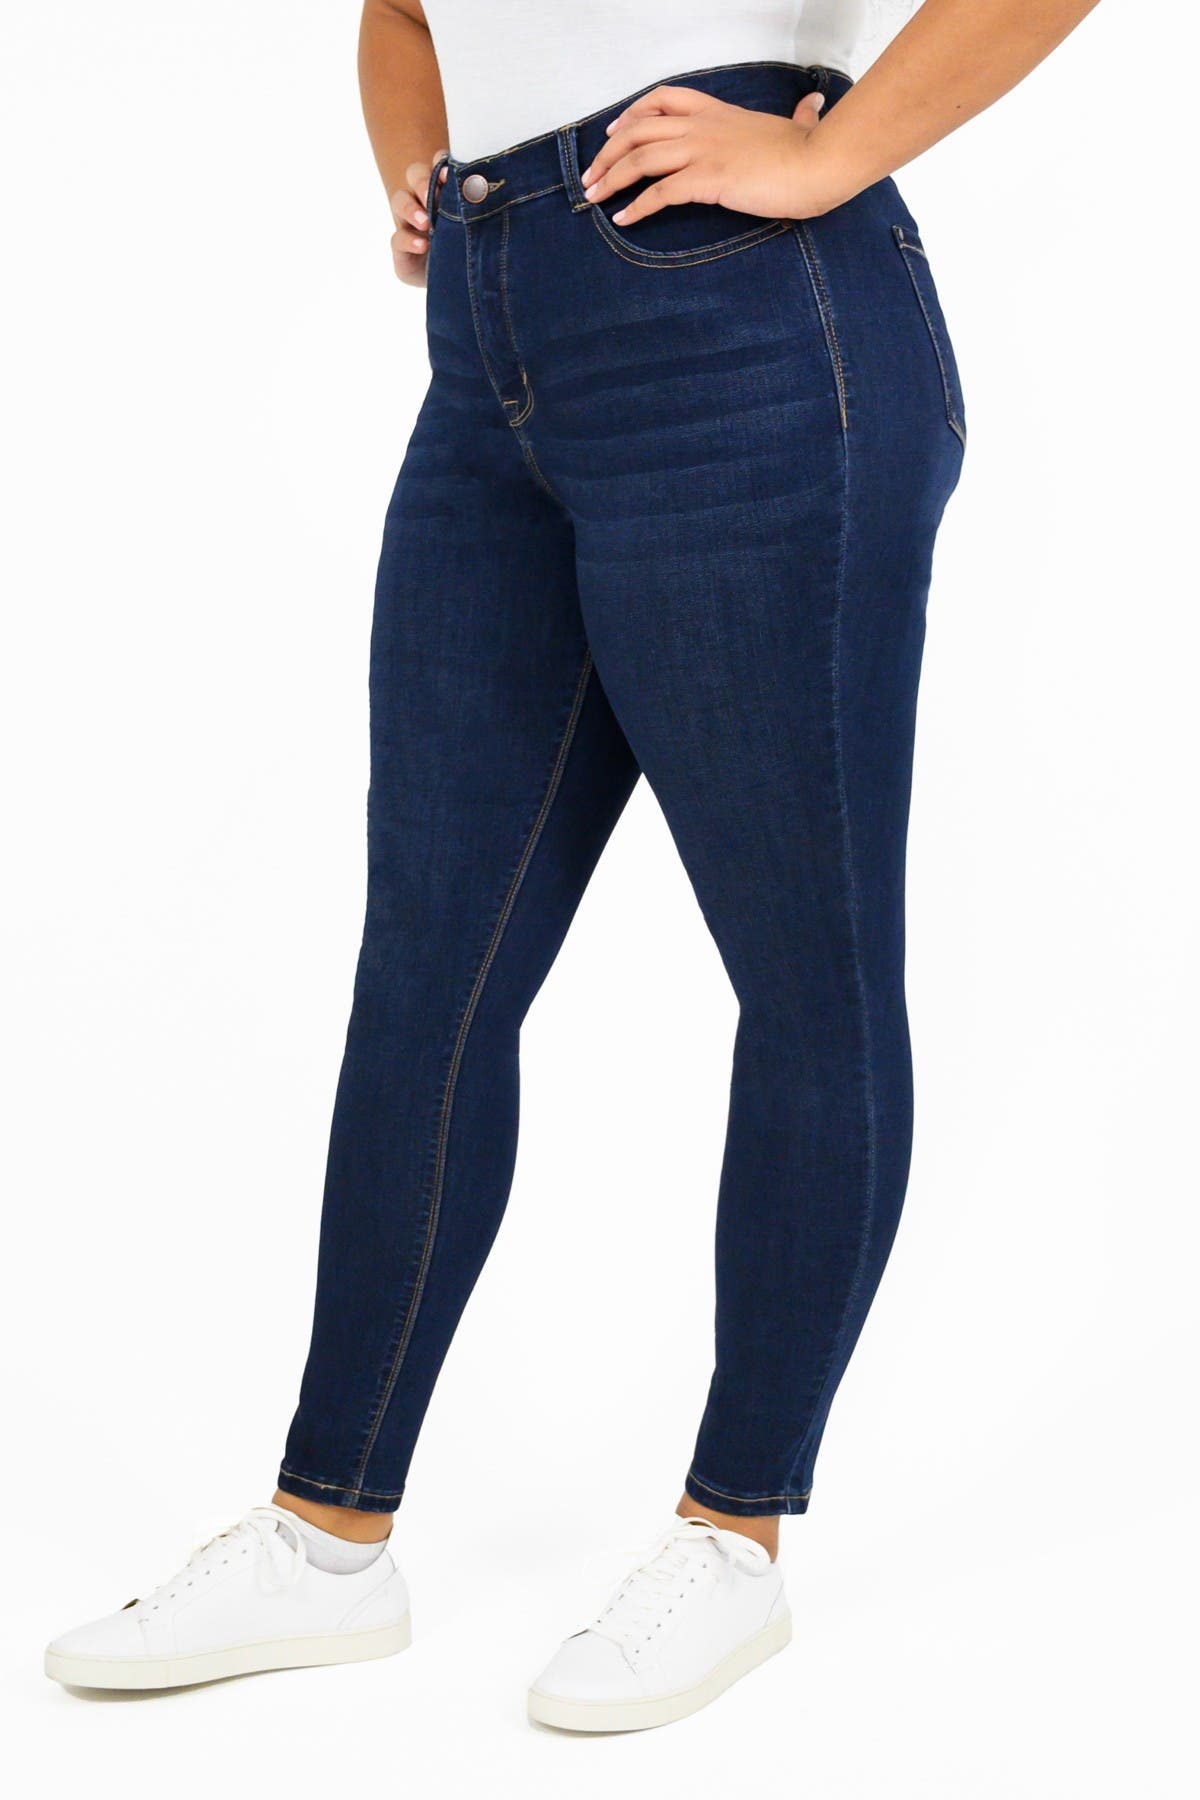 curve appeal jeans plus size clothing